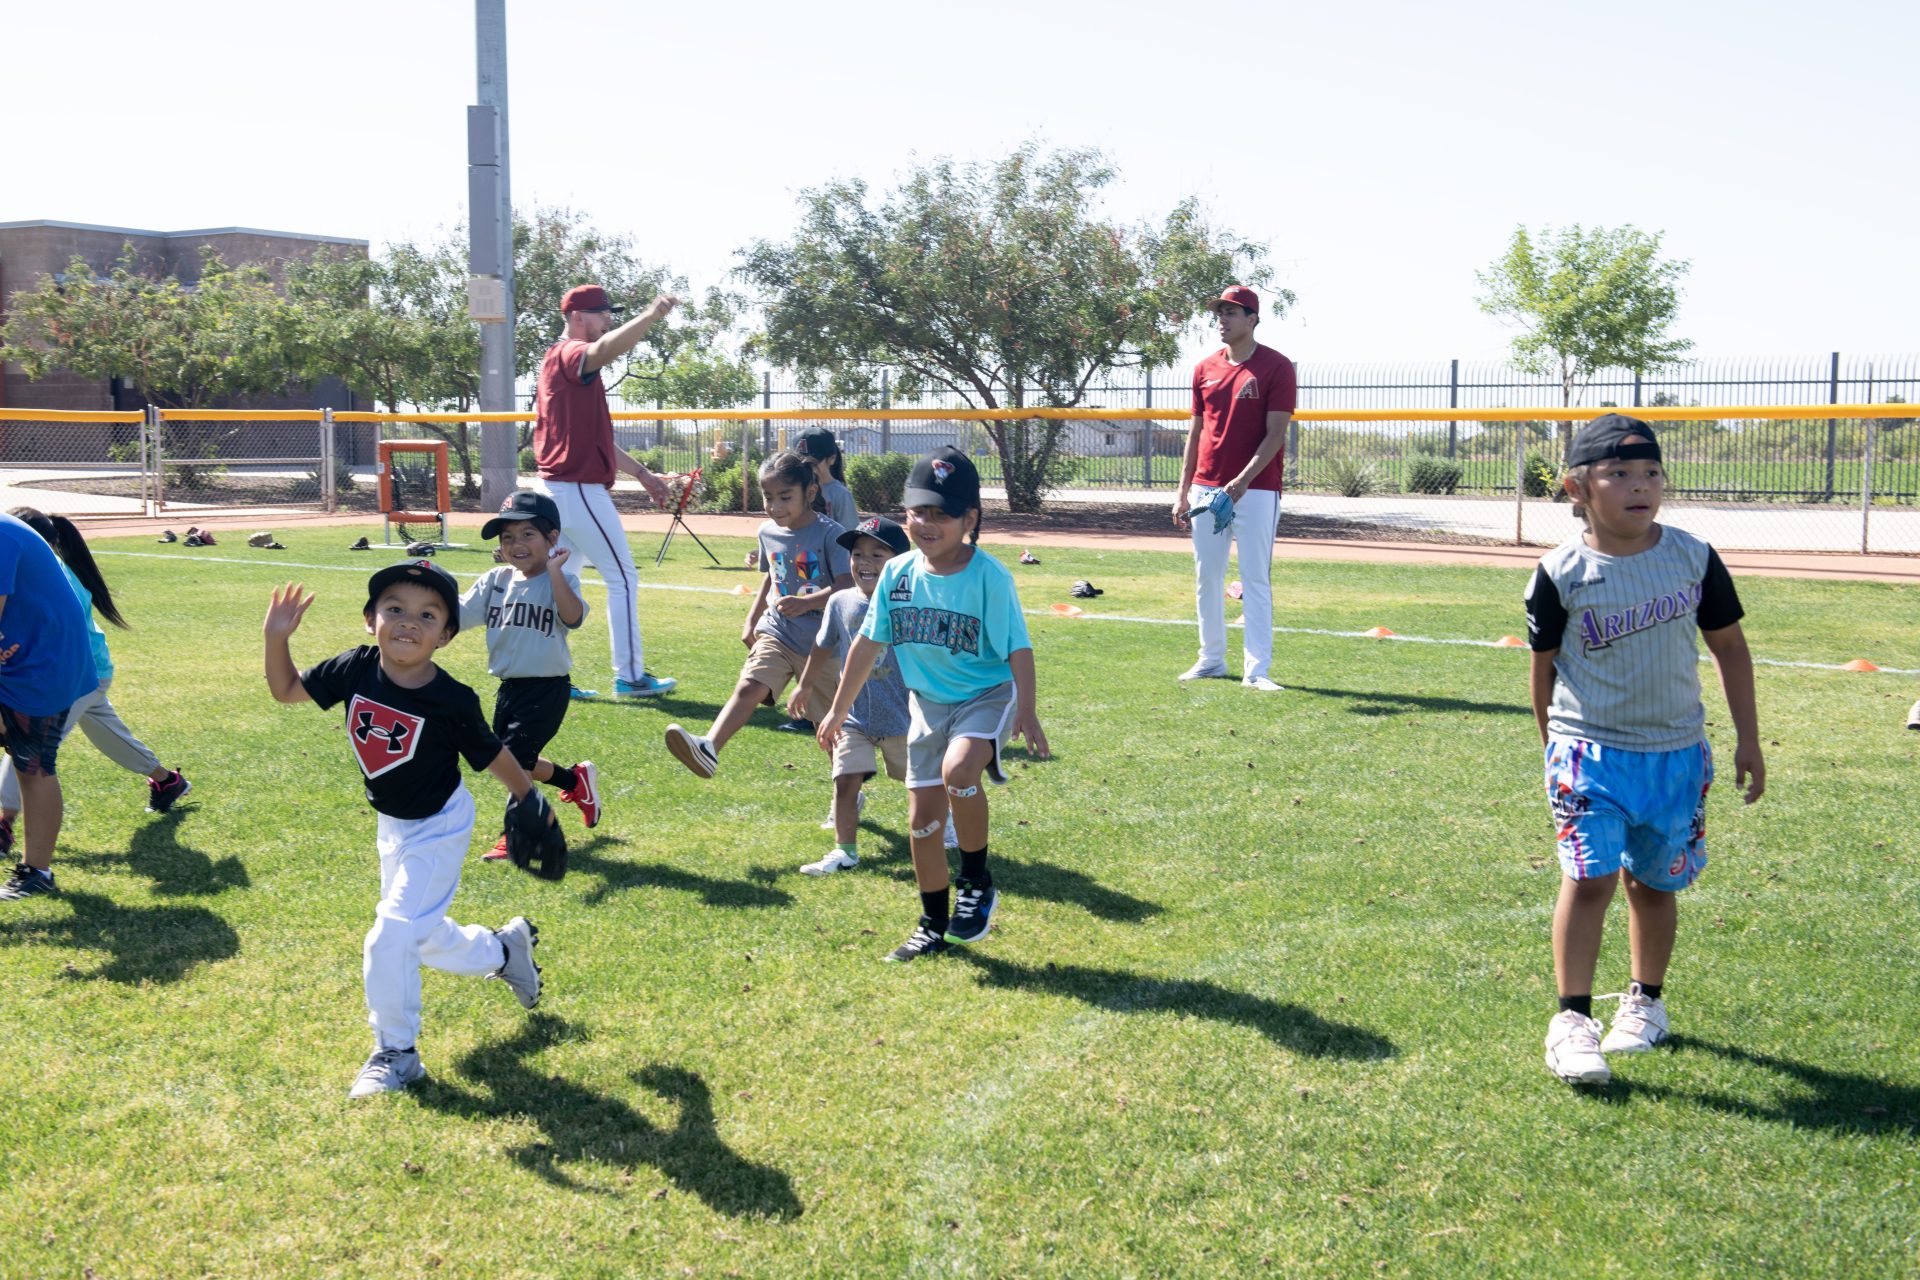 D-Backs Baseball Academy Brings Baseball Clinic to WOLF